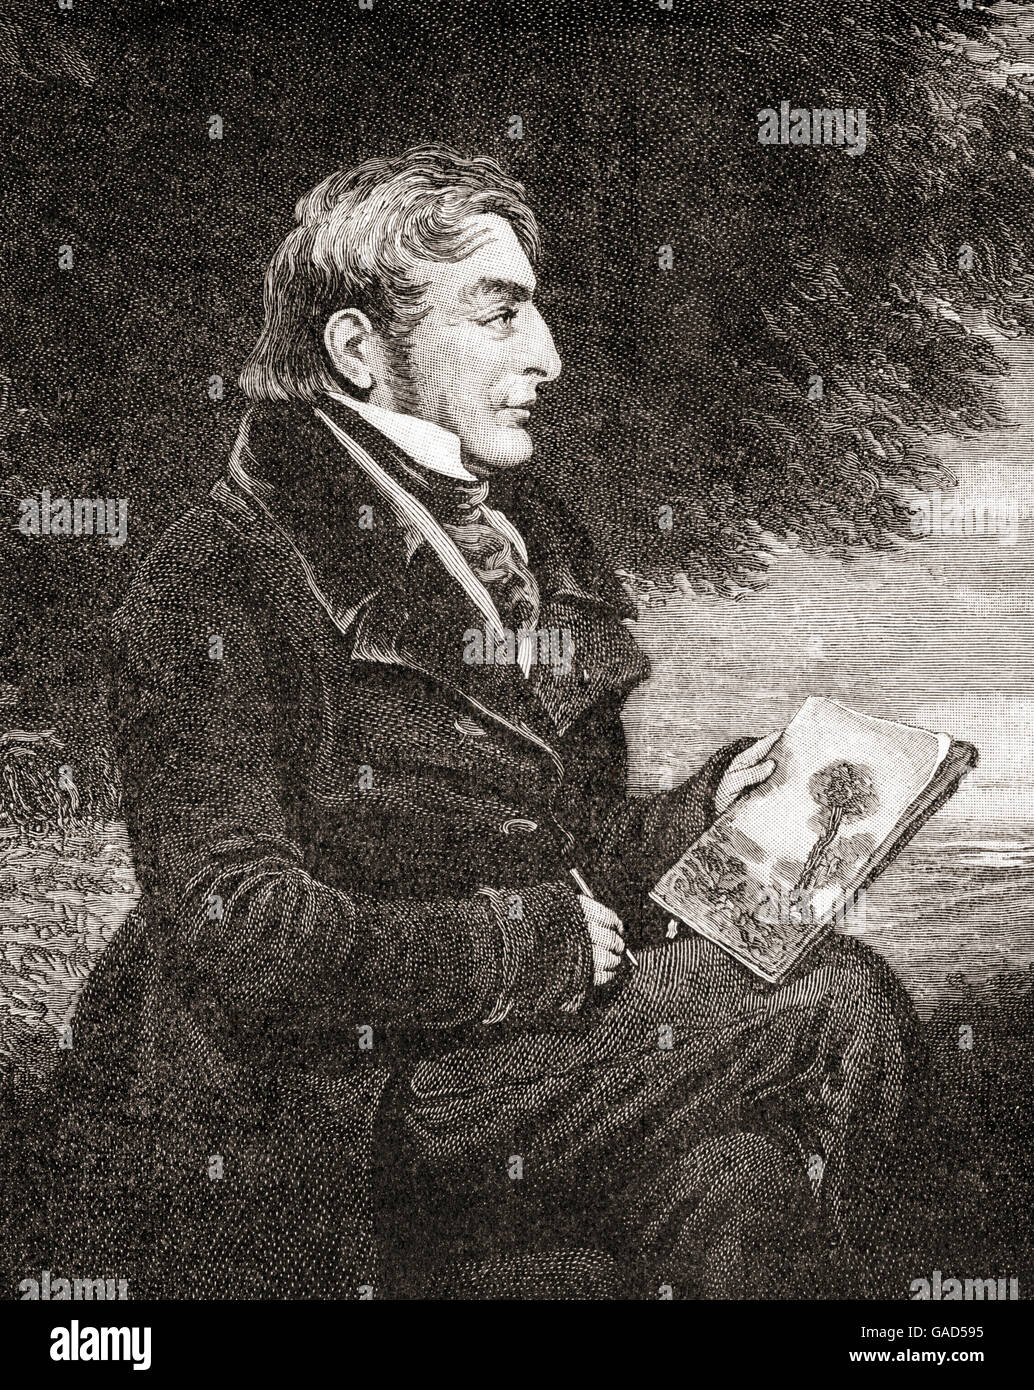 J.M.W Turner.  Joseph Mallord William Turner, 1775-1851.  Englische Romantiker Landschaftsmaler. Stockfoto